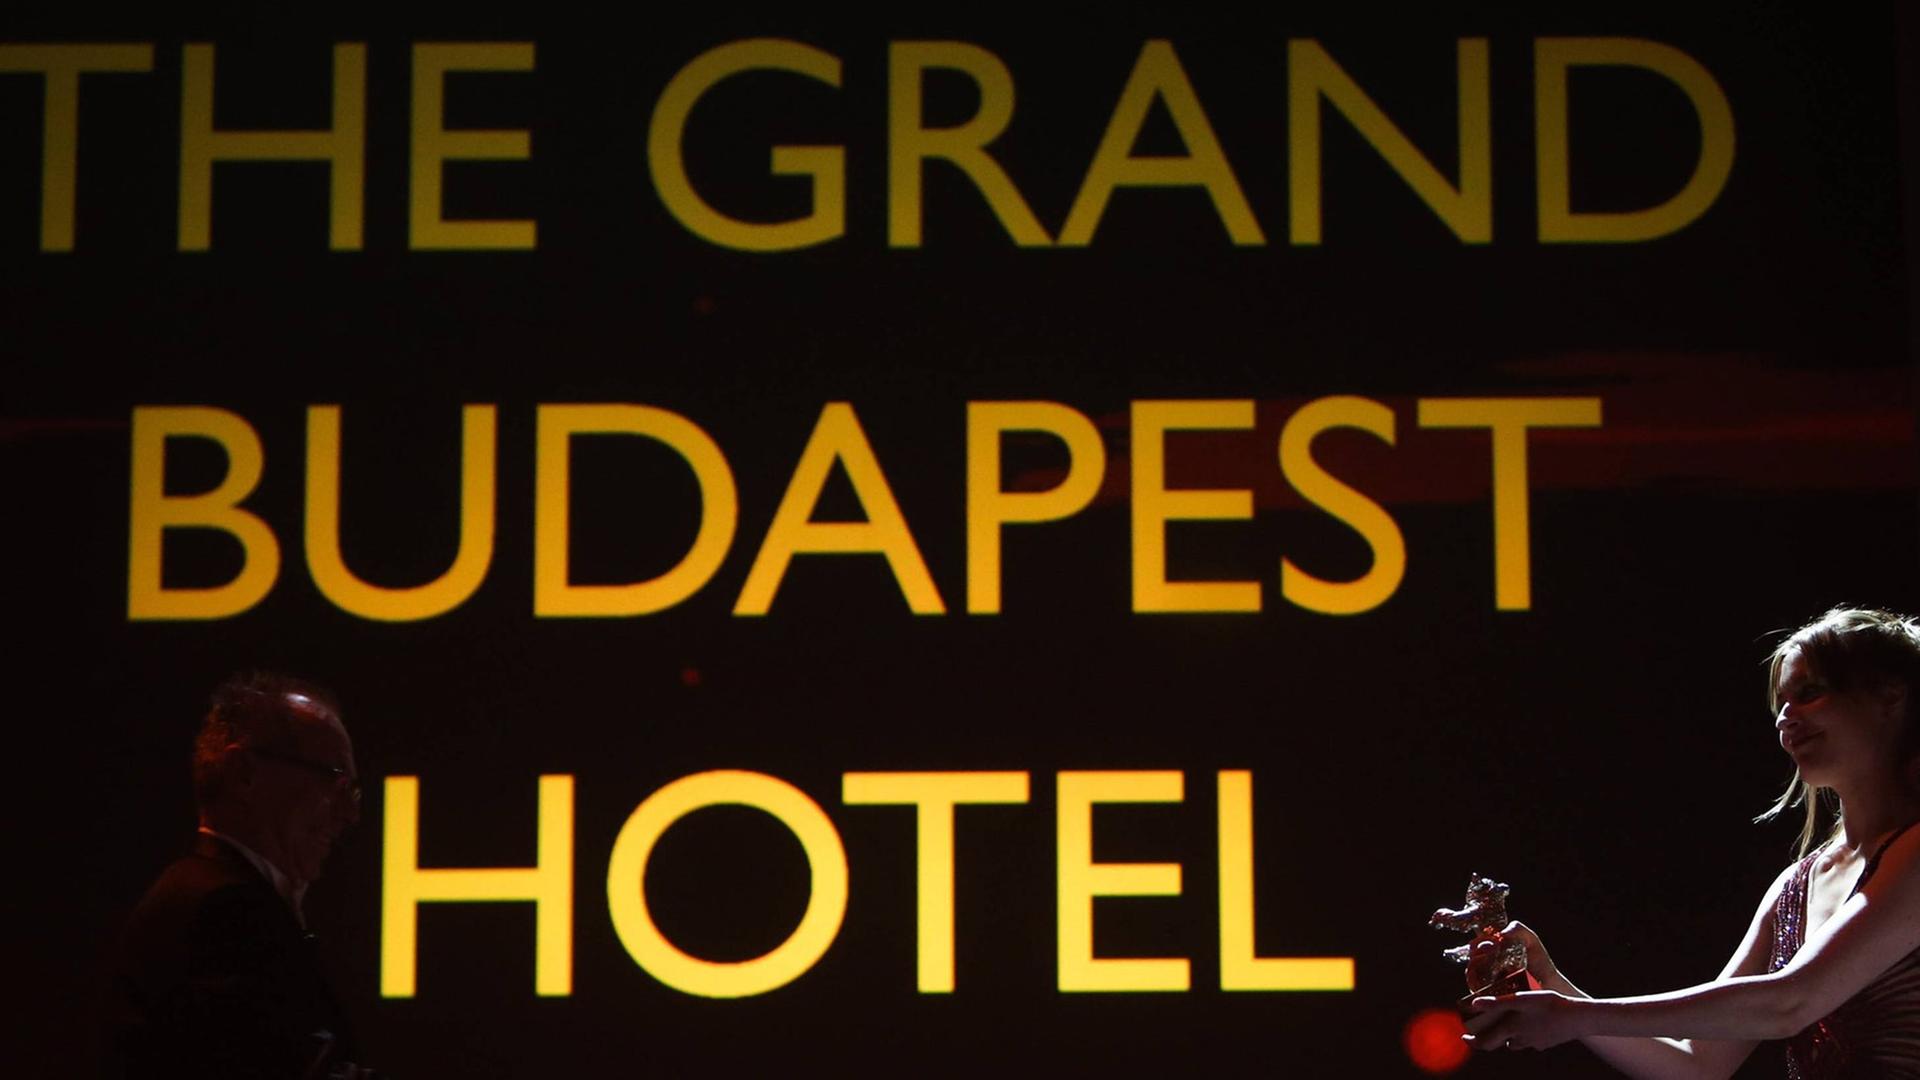 Preisverleihung: Silberner Bär für "The Grand Budapest Hotel" 64. Berlinale 2014